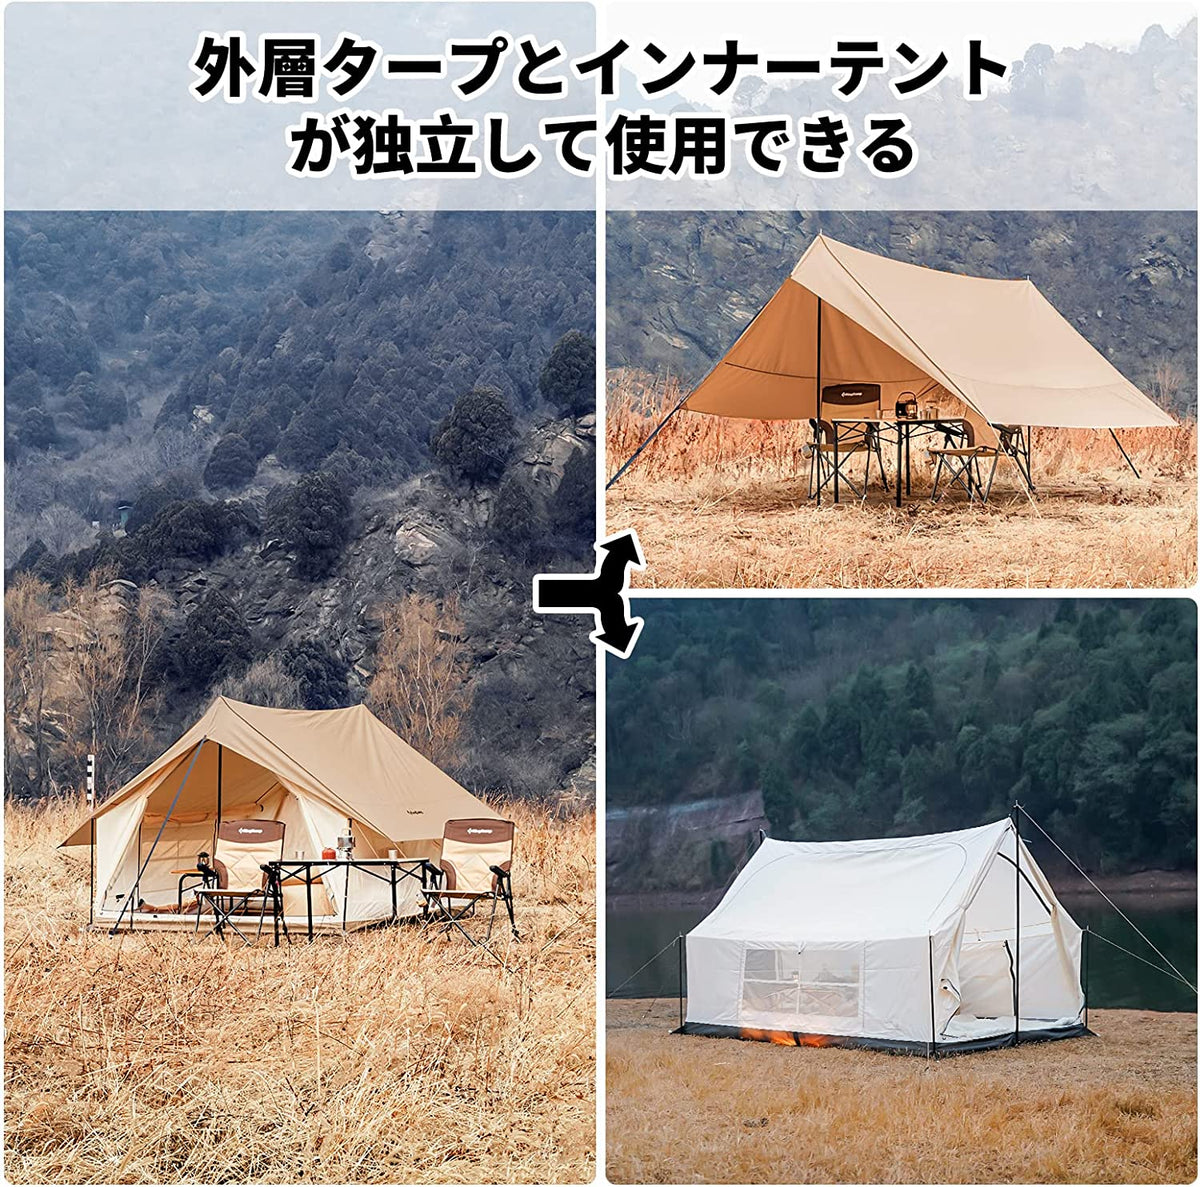 KingCamp テント ベルテント キャンプテント 大型 ファミリーテント 